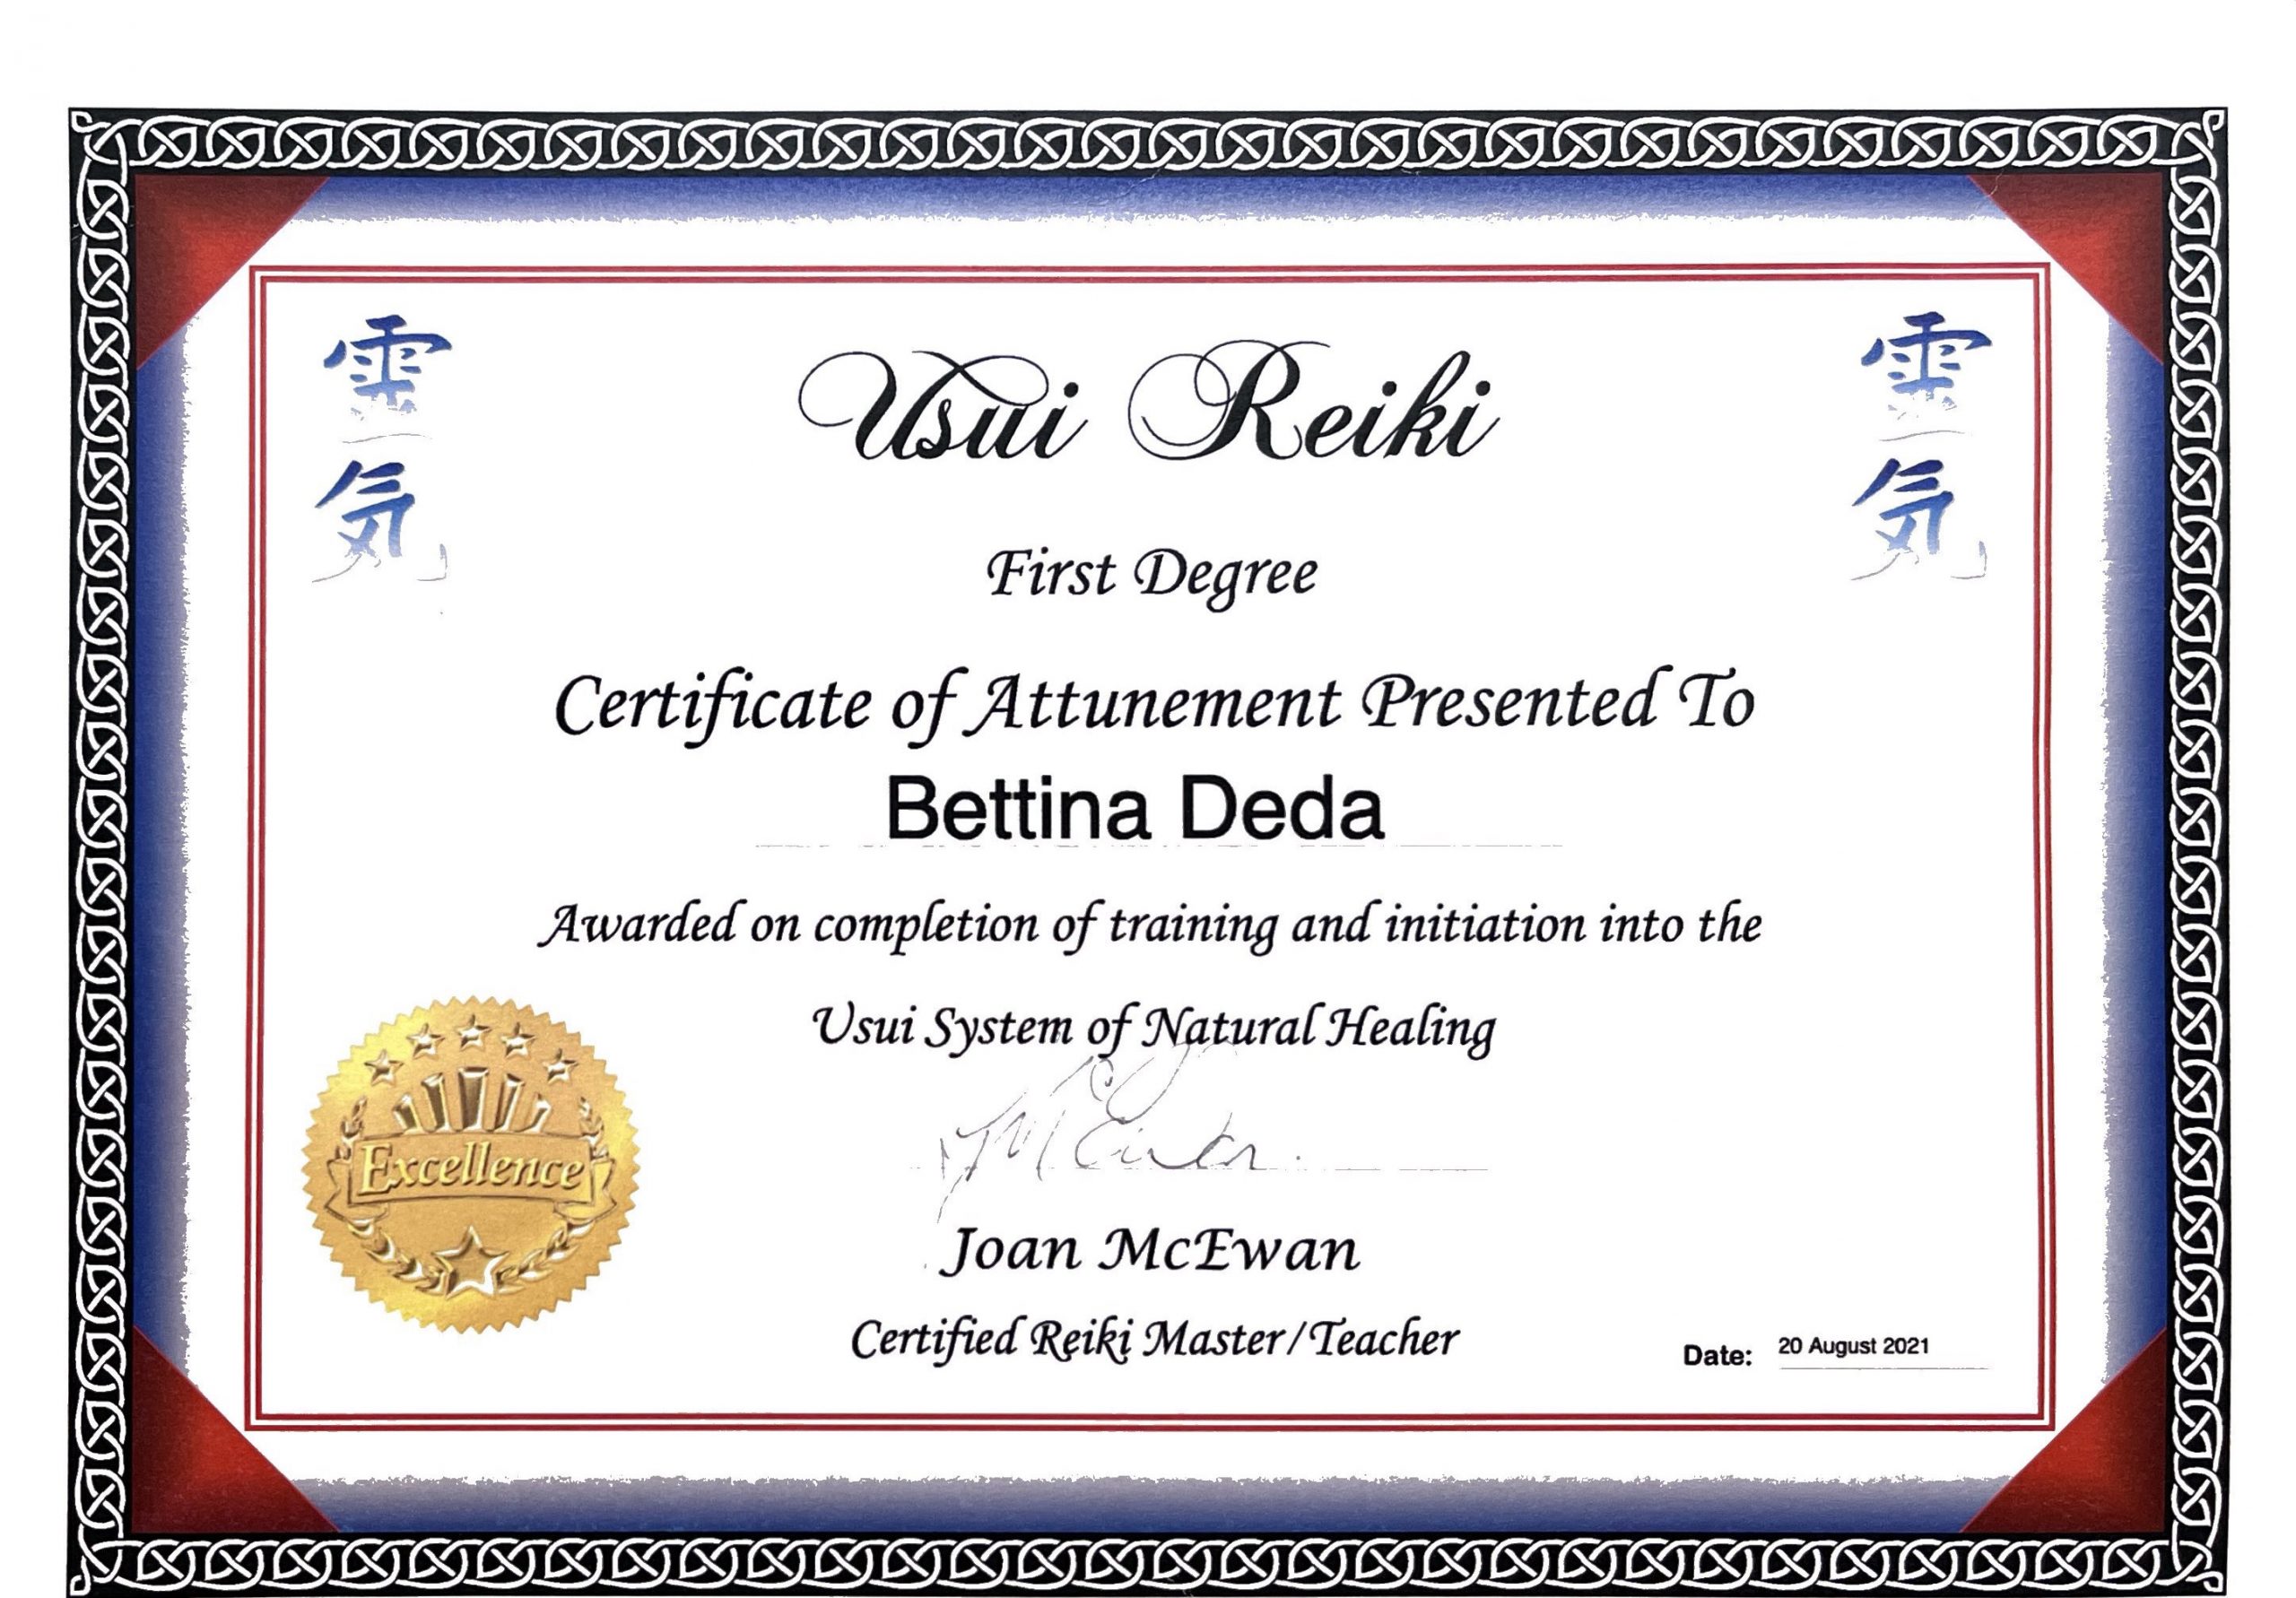 Reiki level 1 certificate, Bettina Deda